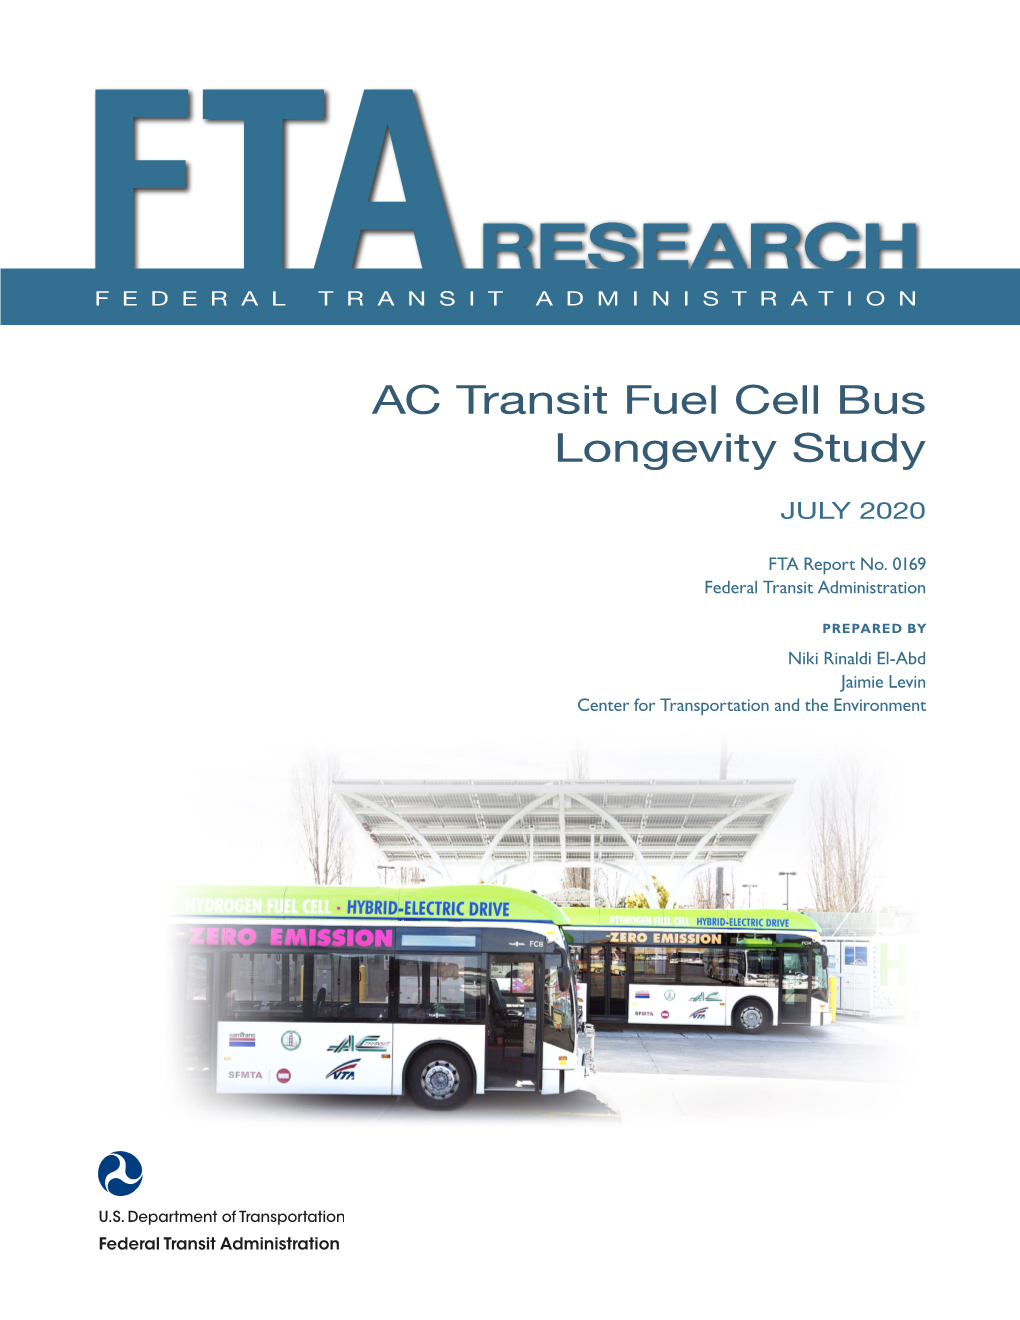 AC Transit Fuel Cell Bus Longevity Study